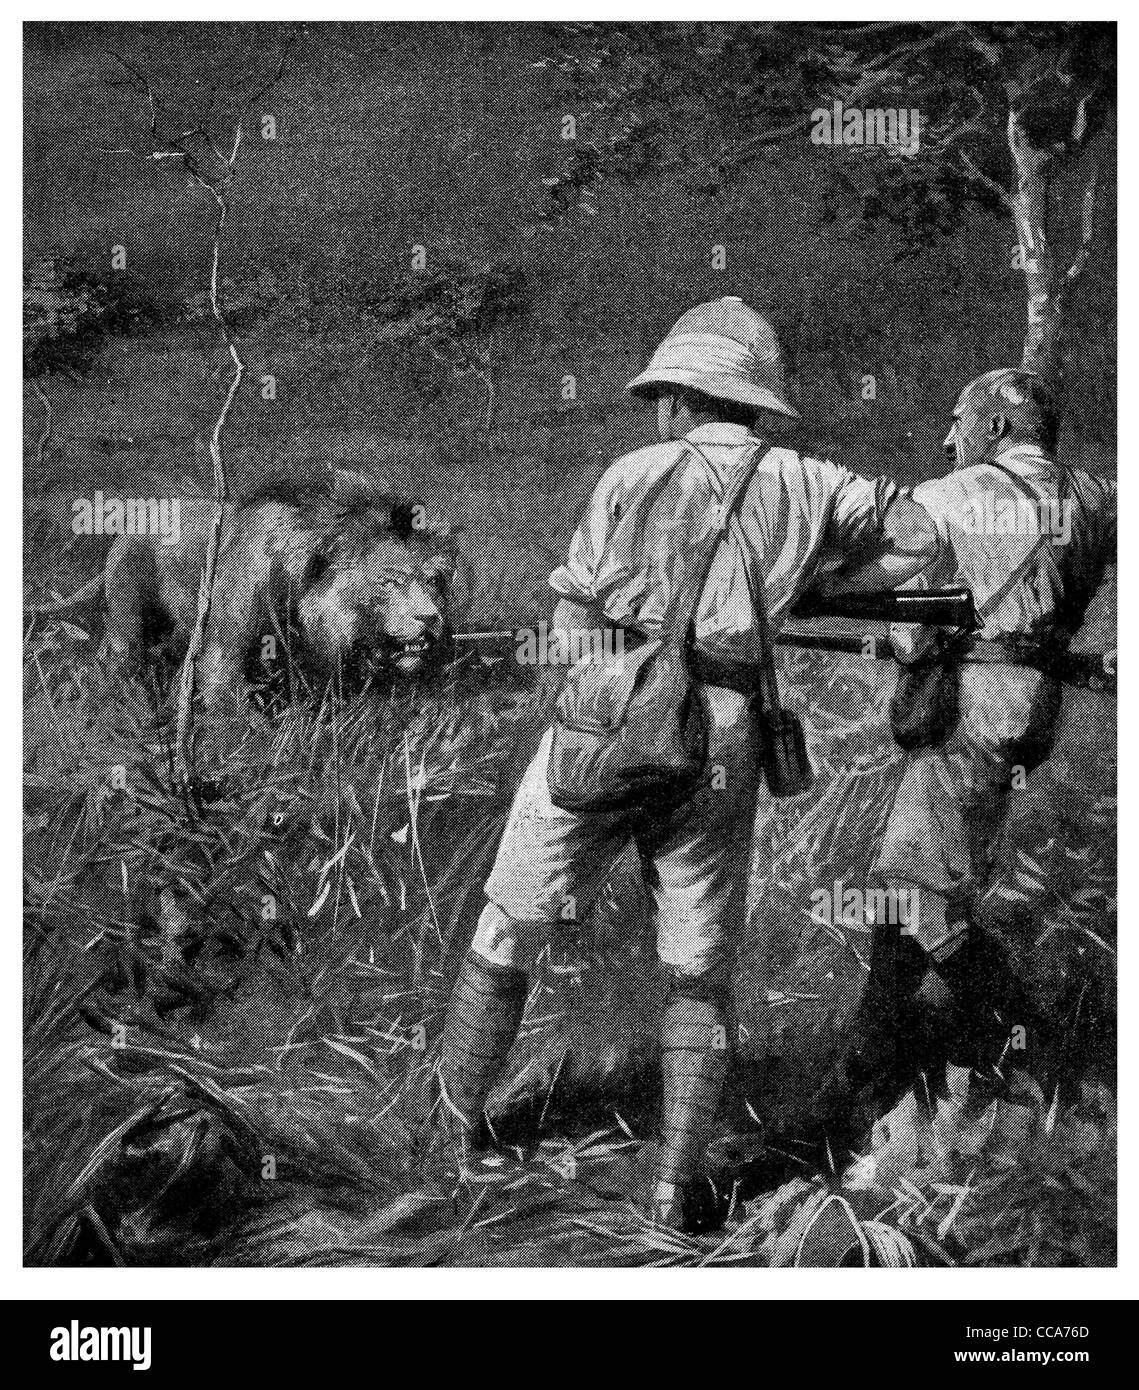 1916 Big Game Hunting Bayonet East Africa Lion Hunt Hunted Rifle